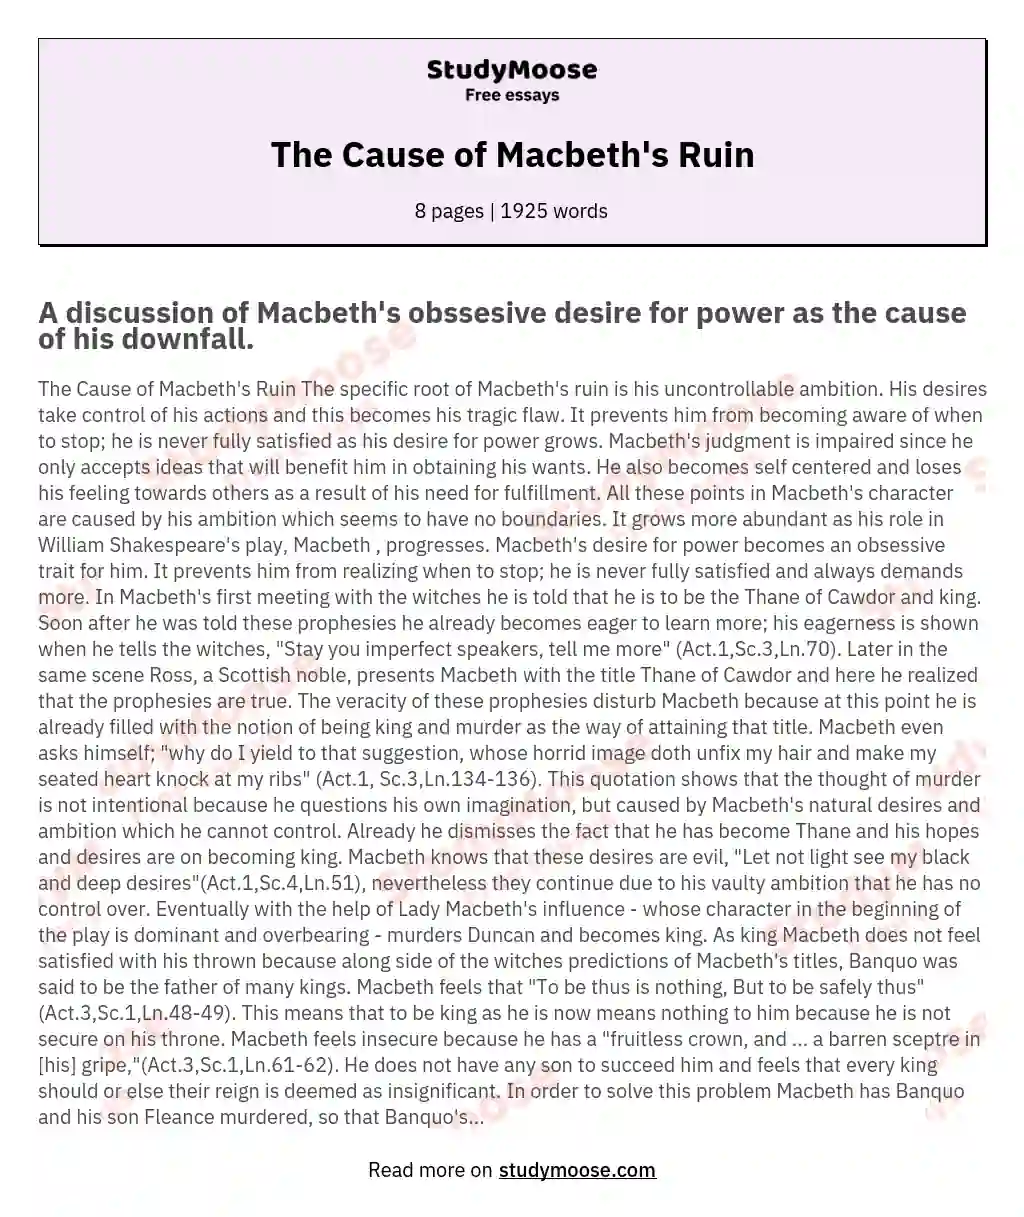 The Cause of Macbeth's Ruin